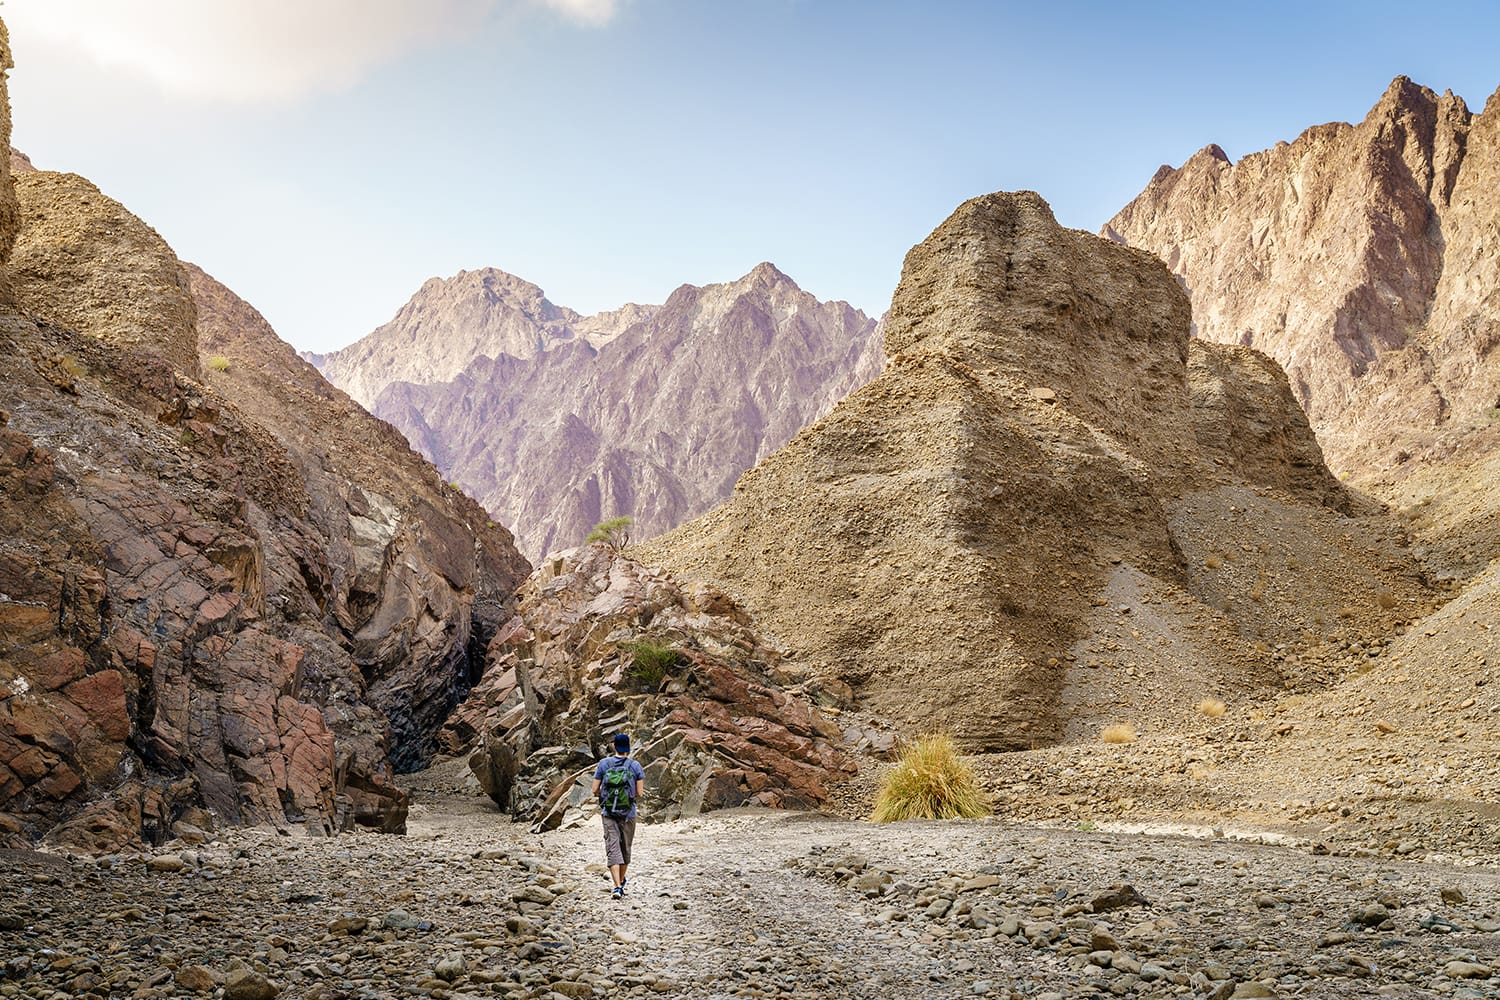 A man is hiking through a wadi in Hajar Mountains near Hatta, UAE